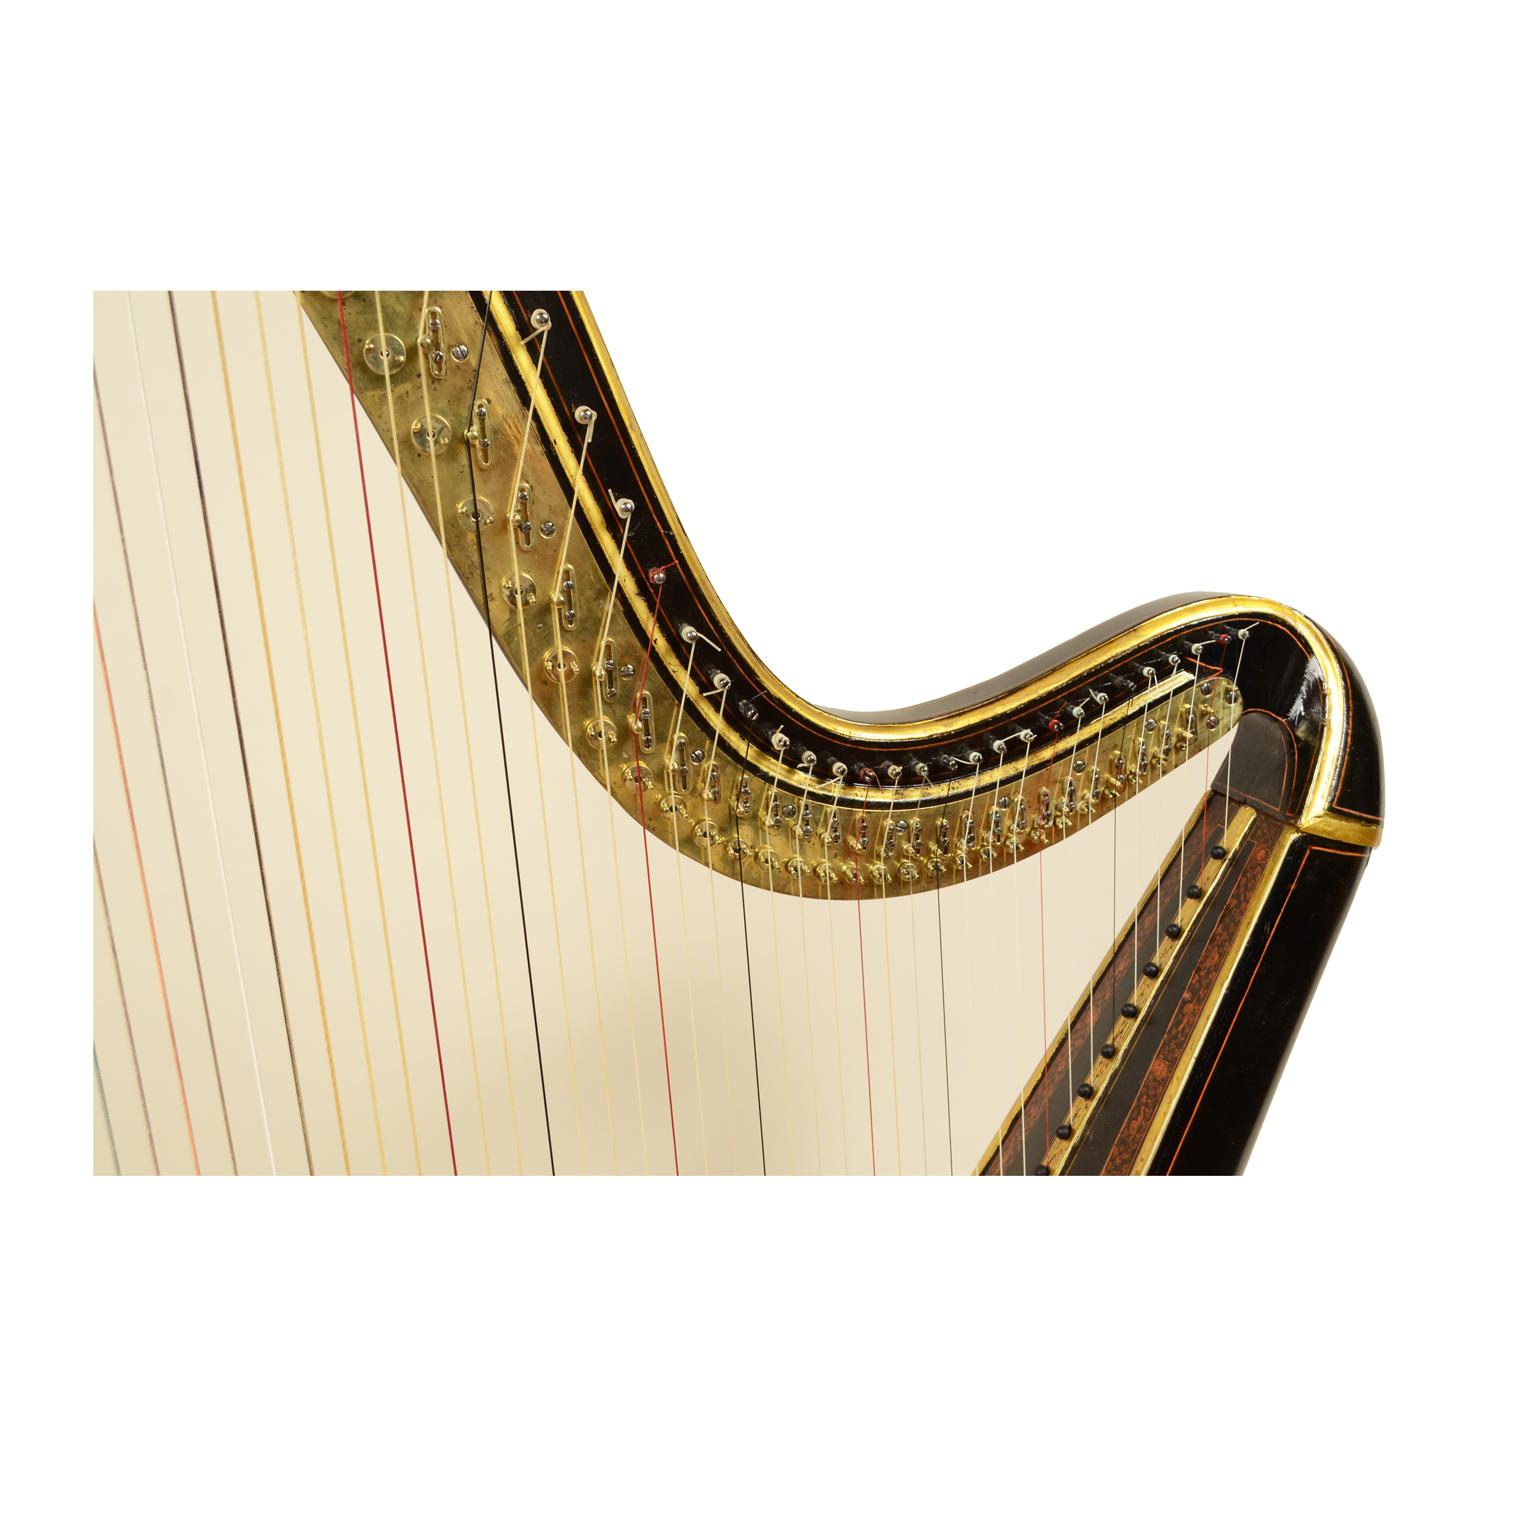 British Harp Signed by Sebastian Erard's Patent Harp N. 881 N. 18, 1808-1809